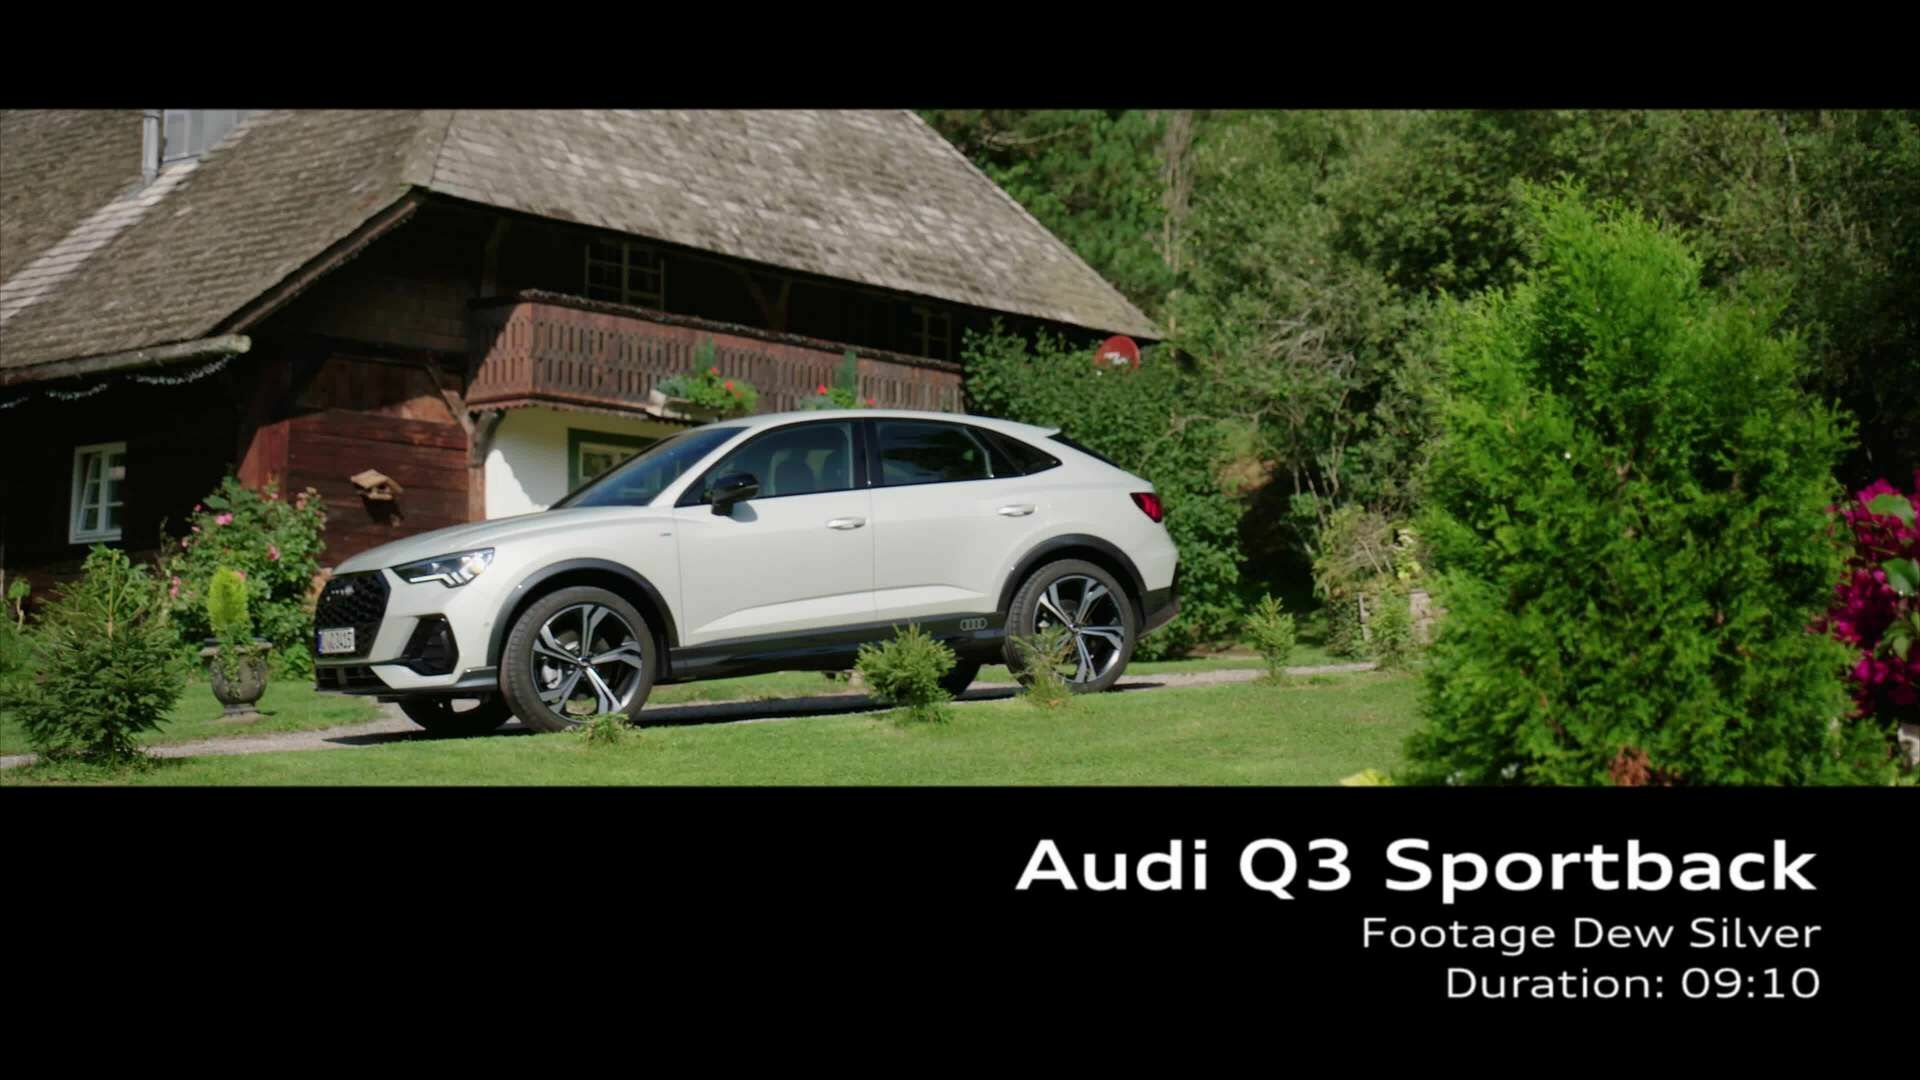 Audi Q3 Sportback Dew Silver (Footage)